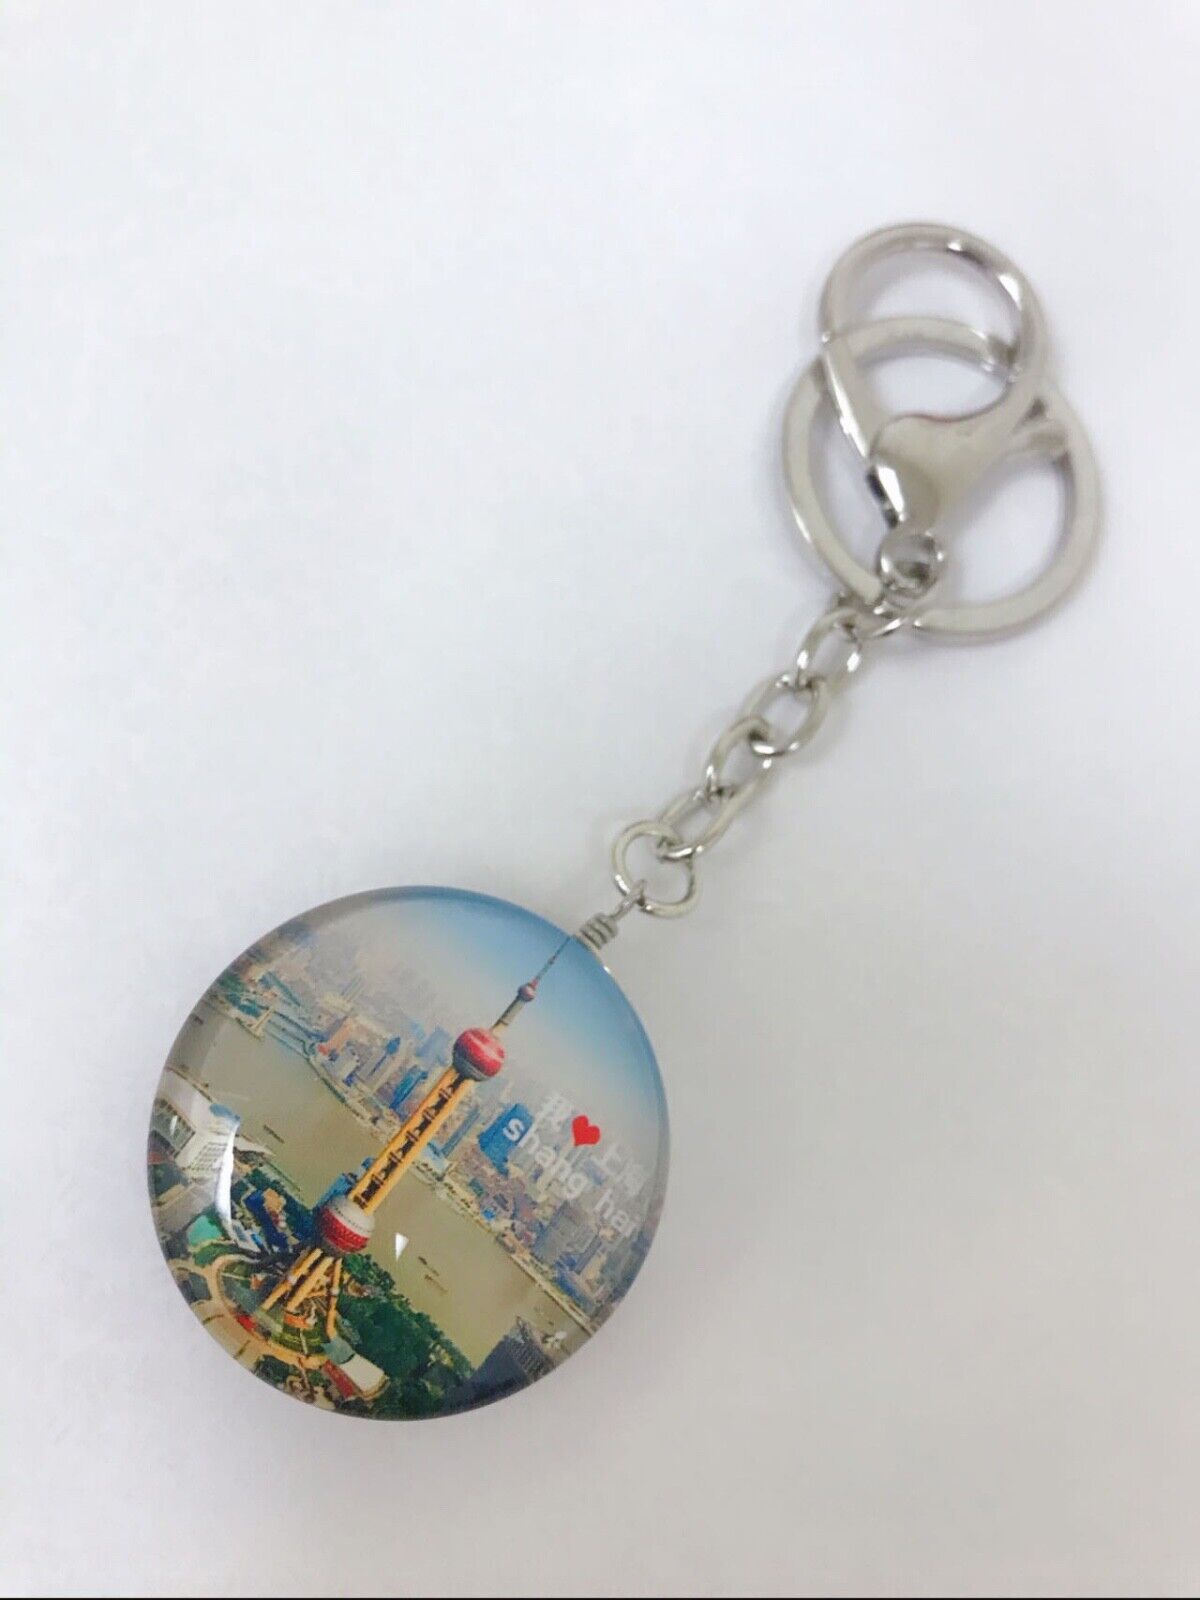 Shanghai Oriental Pearl Tower Landscape Crystal Keychain